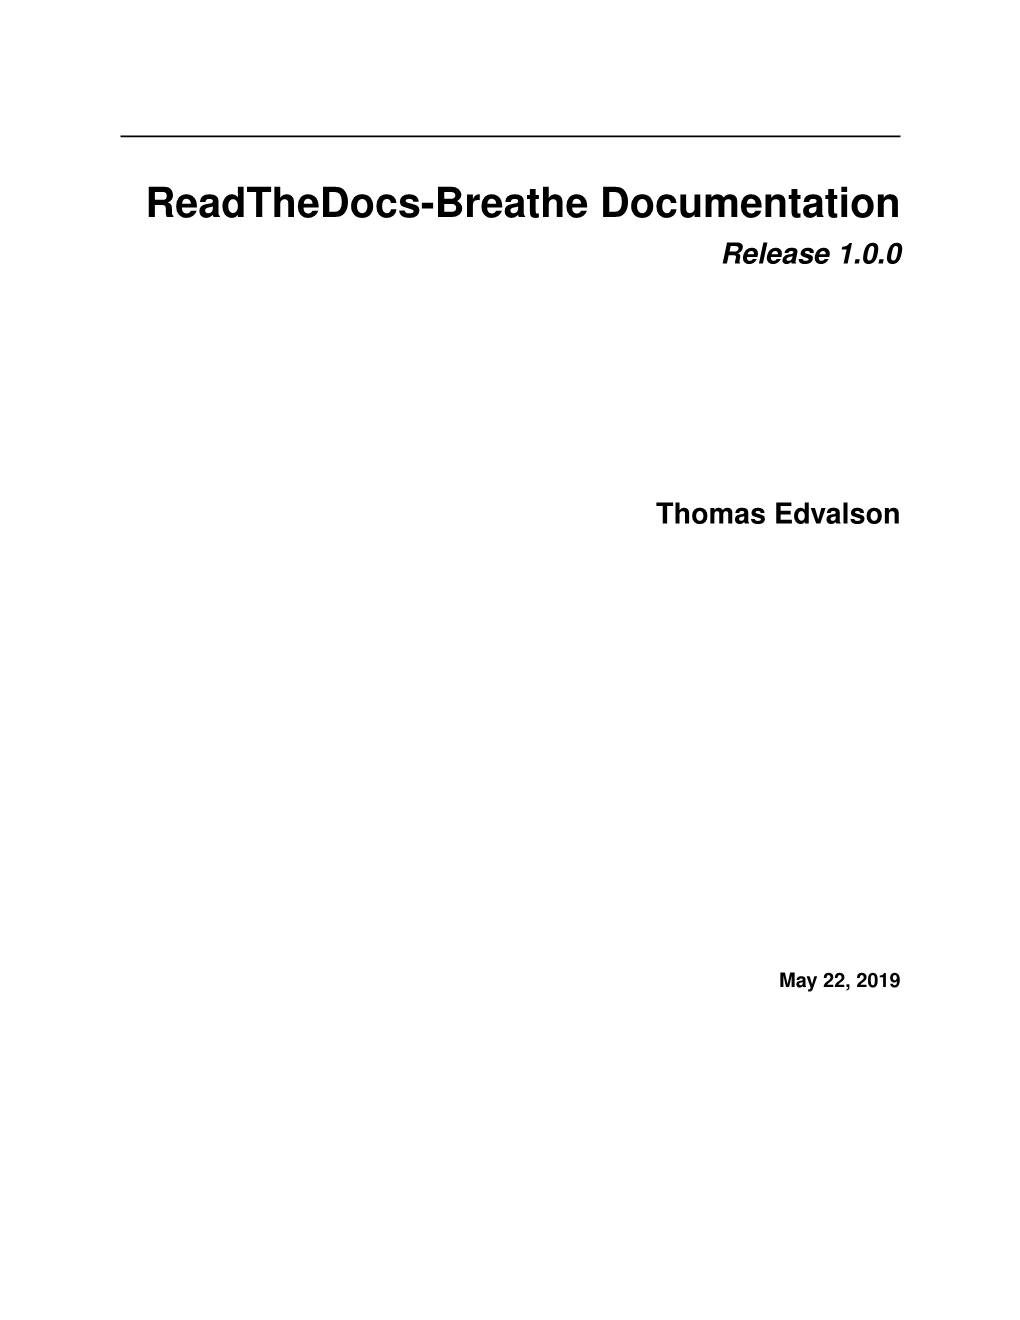 Readthedocs-Breathe Documentation Release 1.0.0